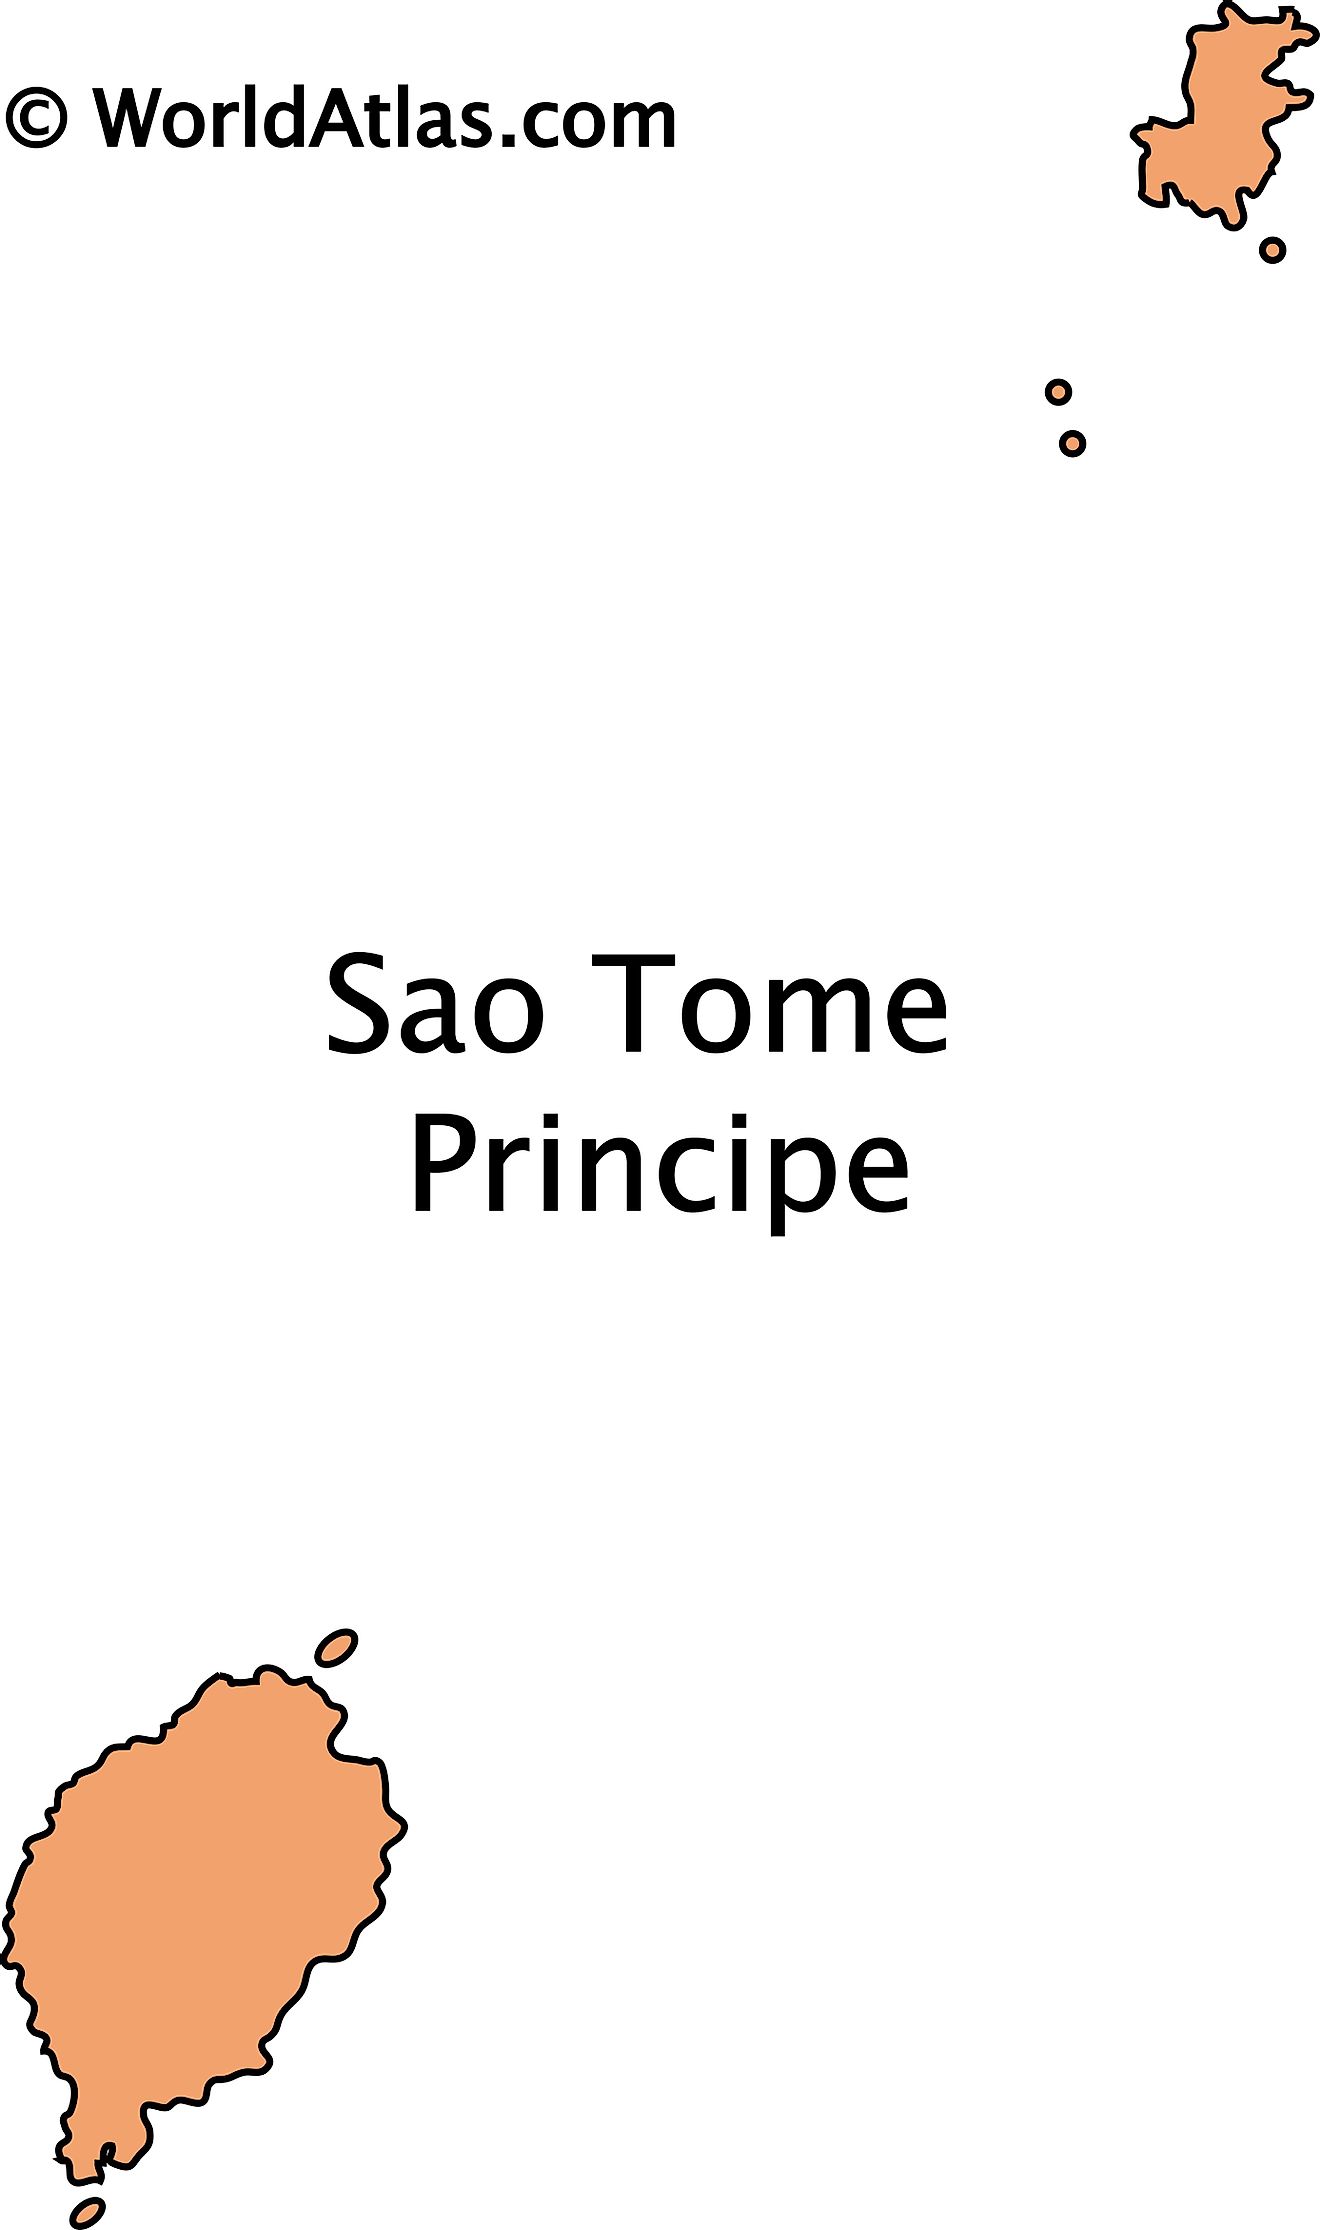 The Outline Map of Sao Tome and Principe